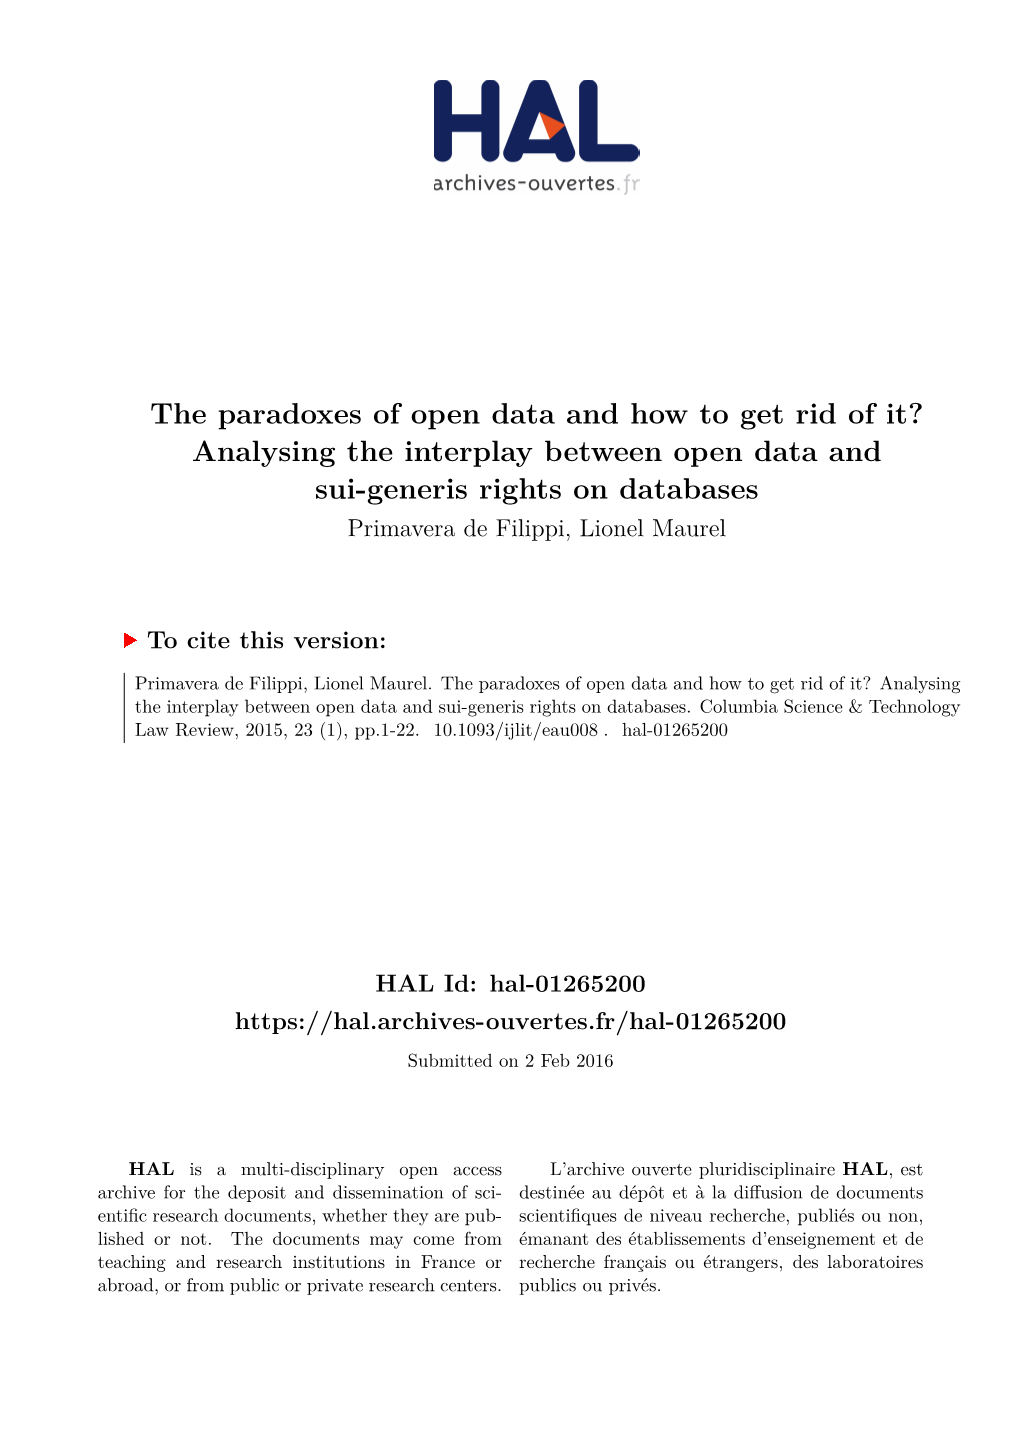 Analysing the Interplay Between Open Data and Sui-Generis Rights on Databases Primavera De Filippi, Lionel Maurel